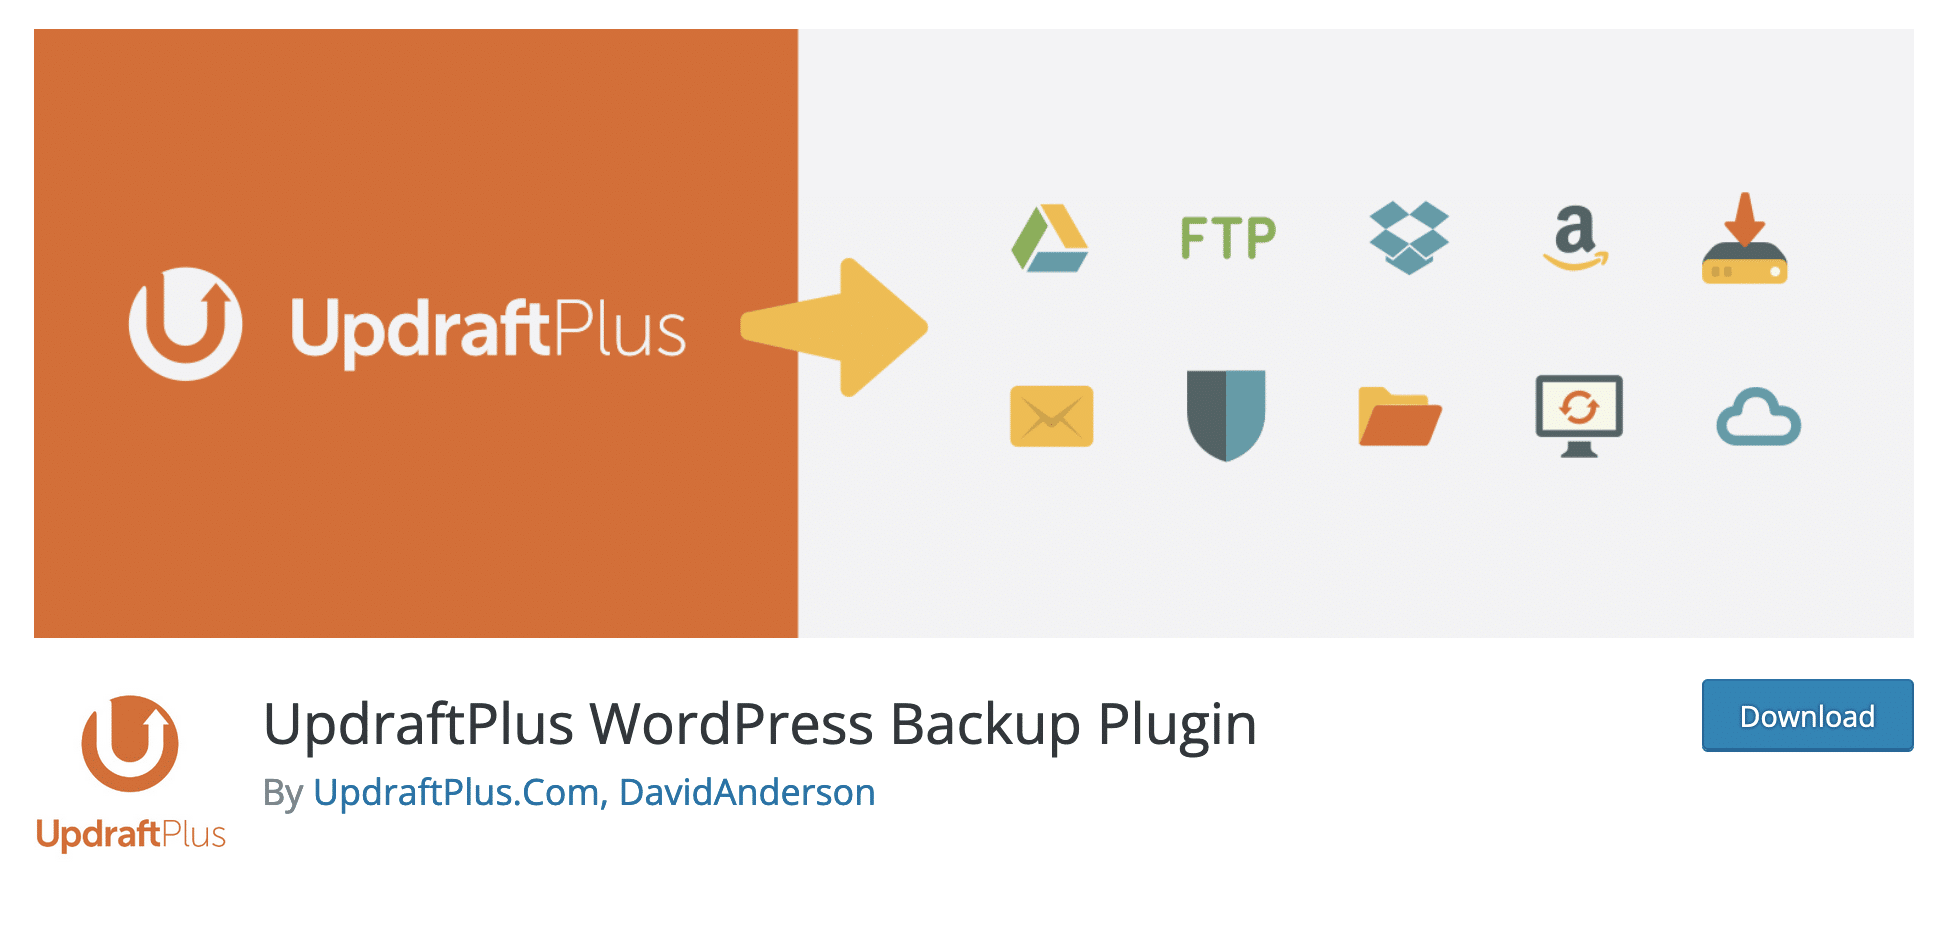 UpdraftPlus is a backup plugin on WordPress.